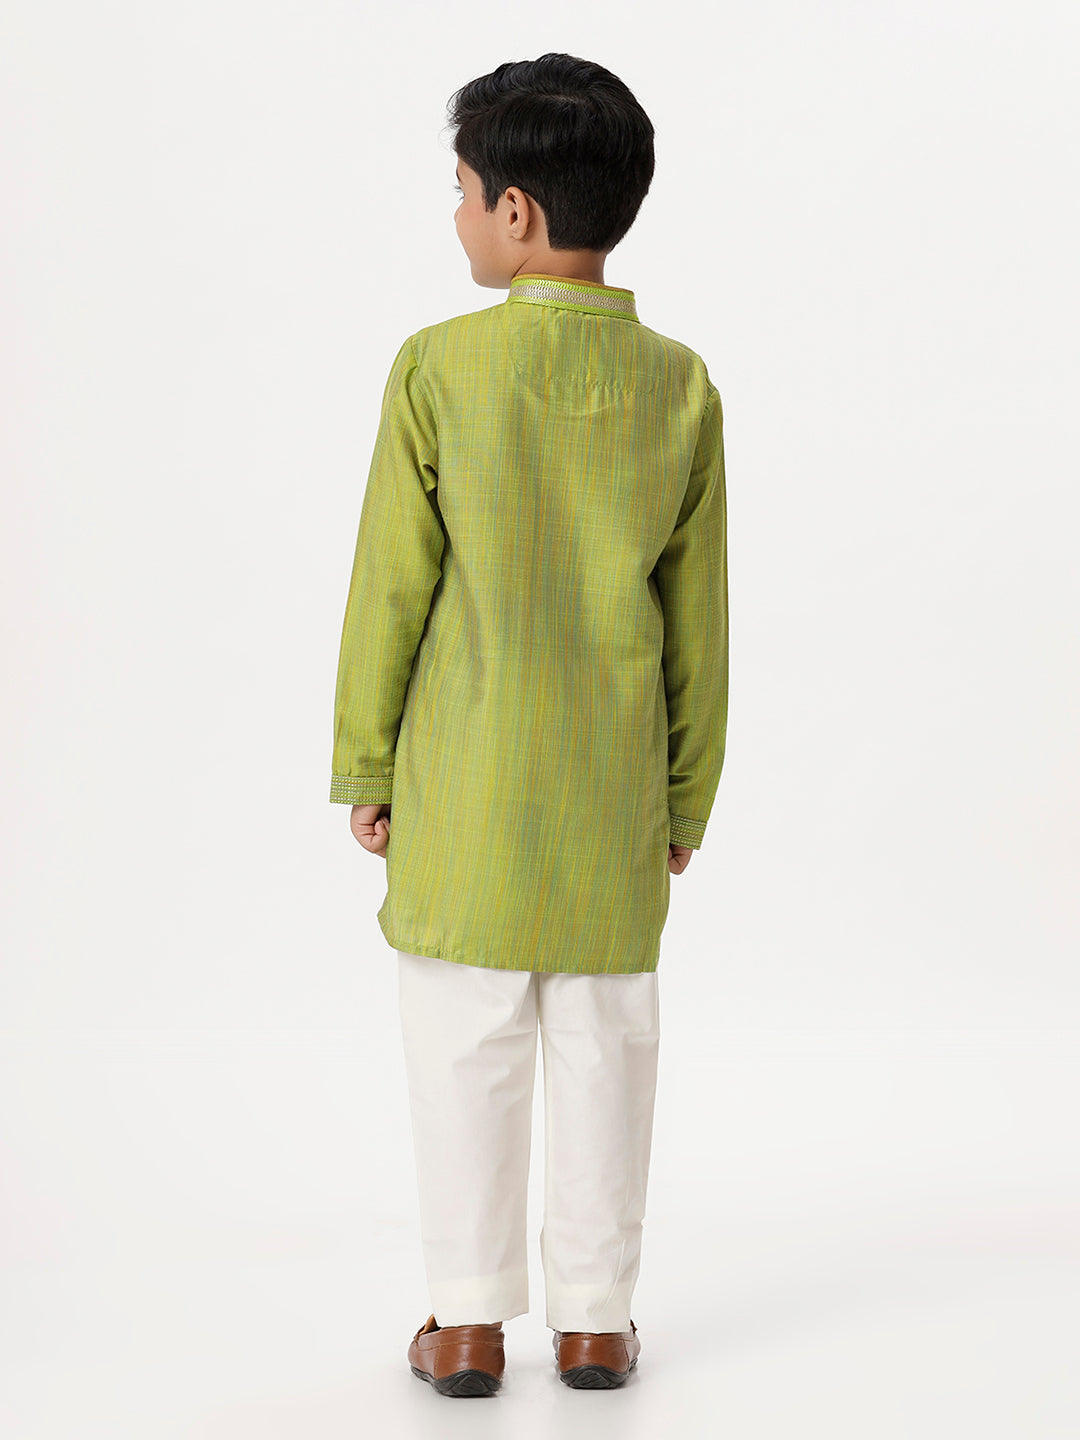 Boys Cotton Embellished Neckline Full Sleeves Parrot Green Kurta with Pyjama Pant Combo EMD5-Back view